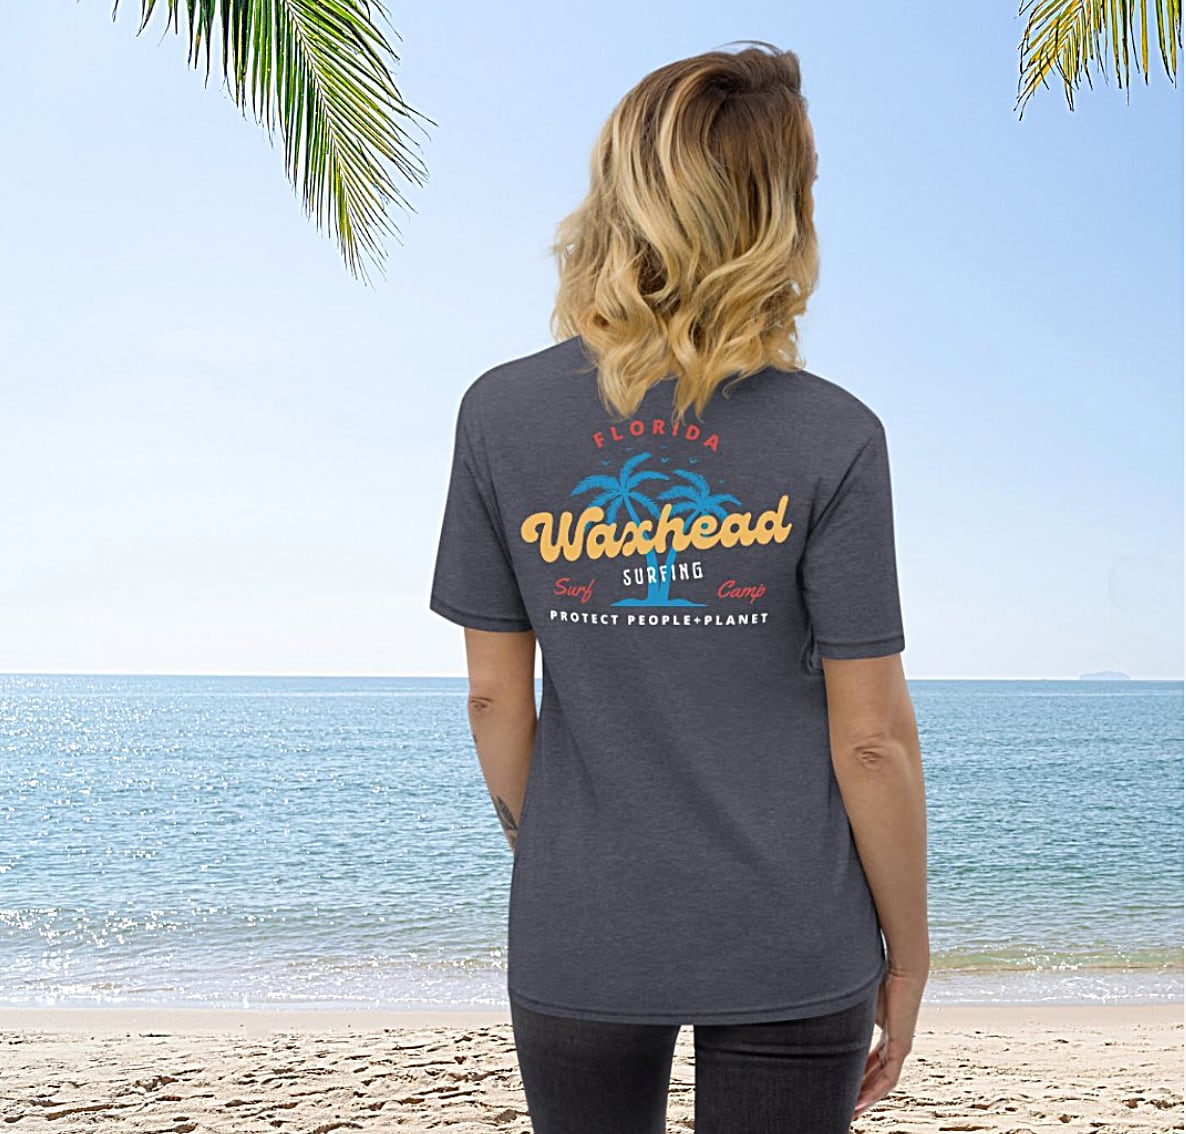 Waxhead sun defense t-shirt, photo on Instagram